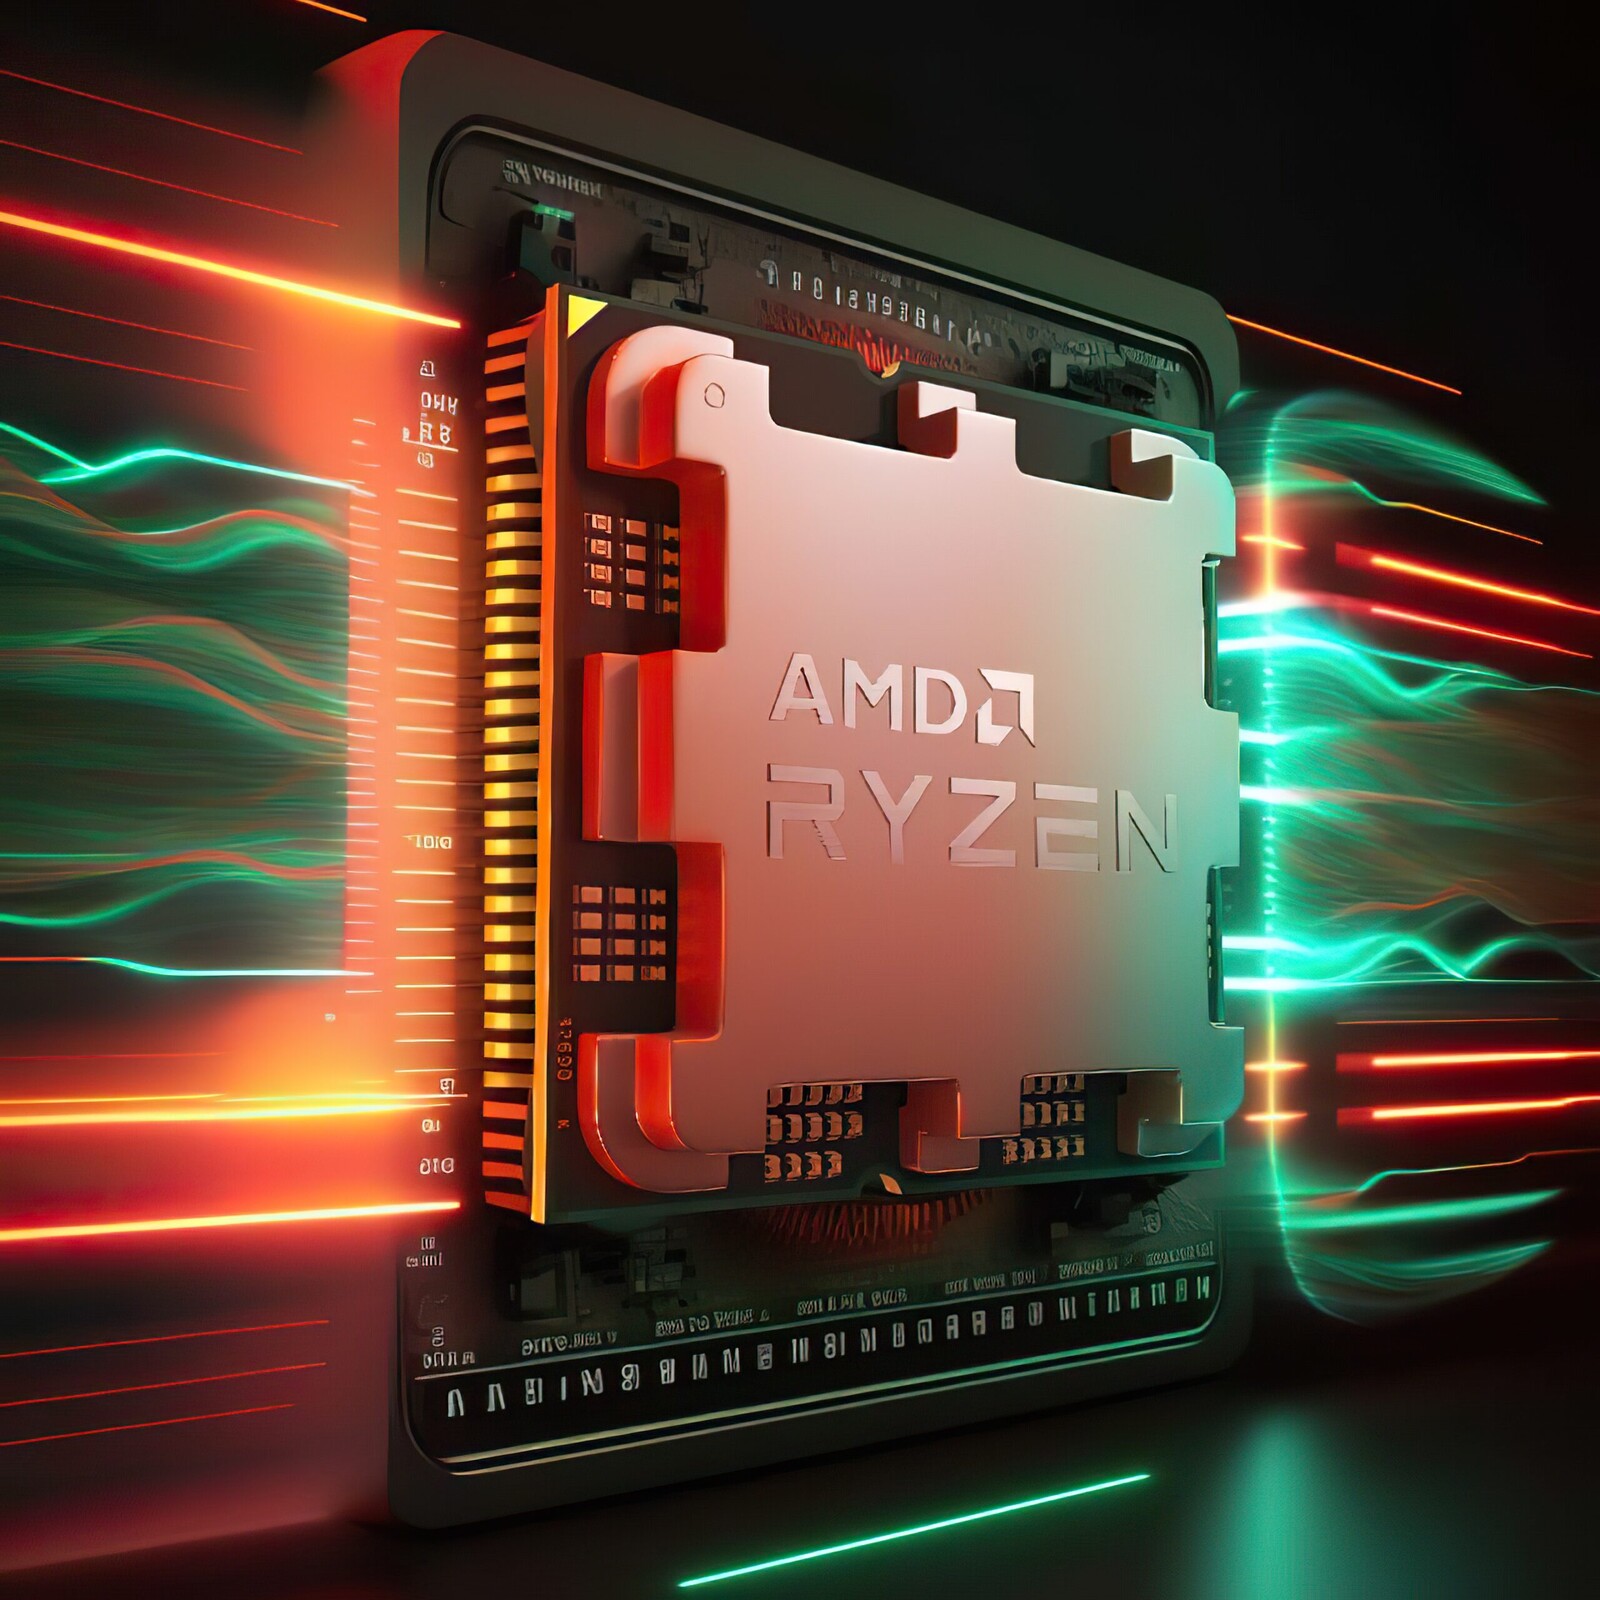 AMD Ryzen 7 7800X3D CPU Review & Benchmarks 